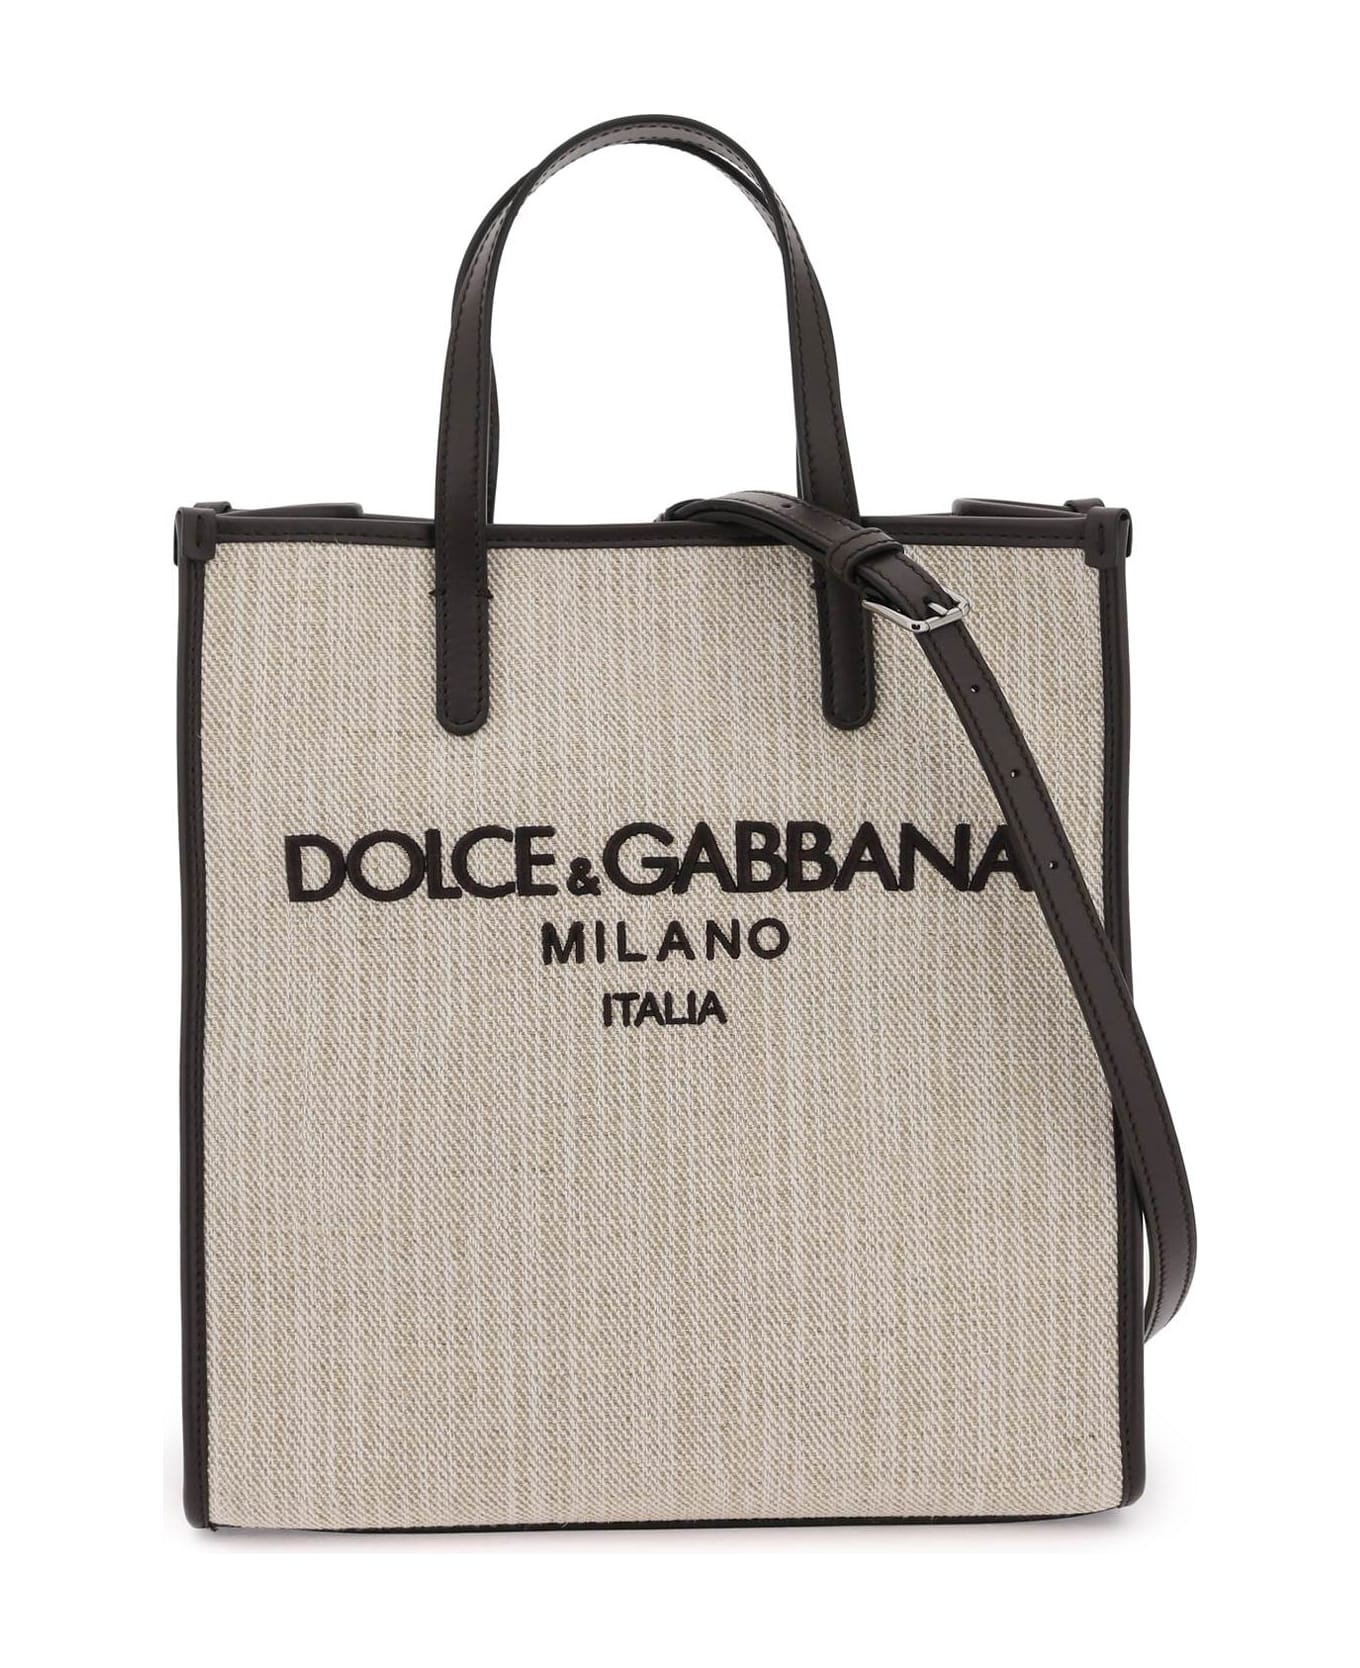 Dolce & Gabbana Textured Canvas Tote Bag - Beige トートバッグ